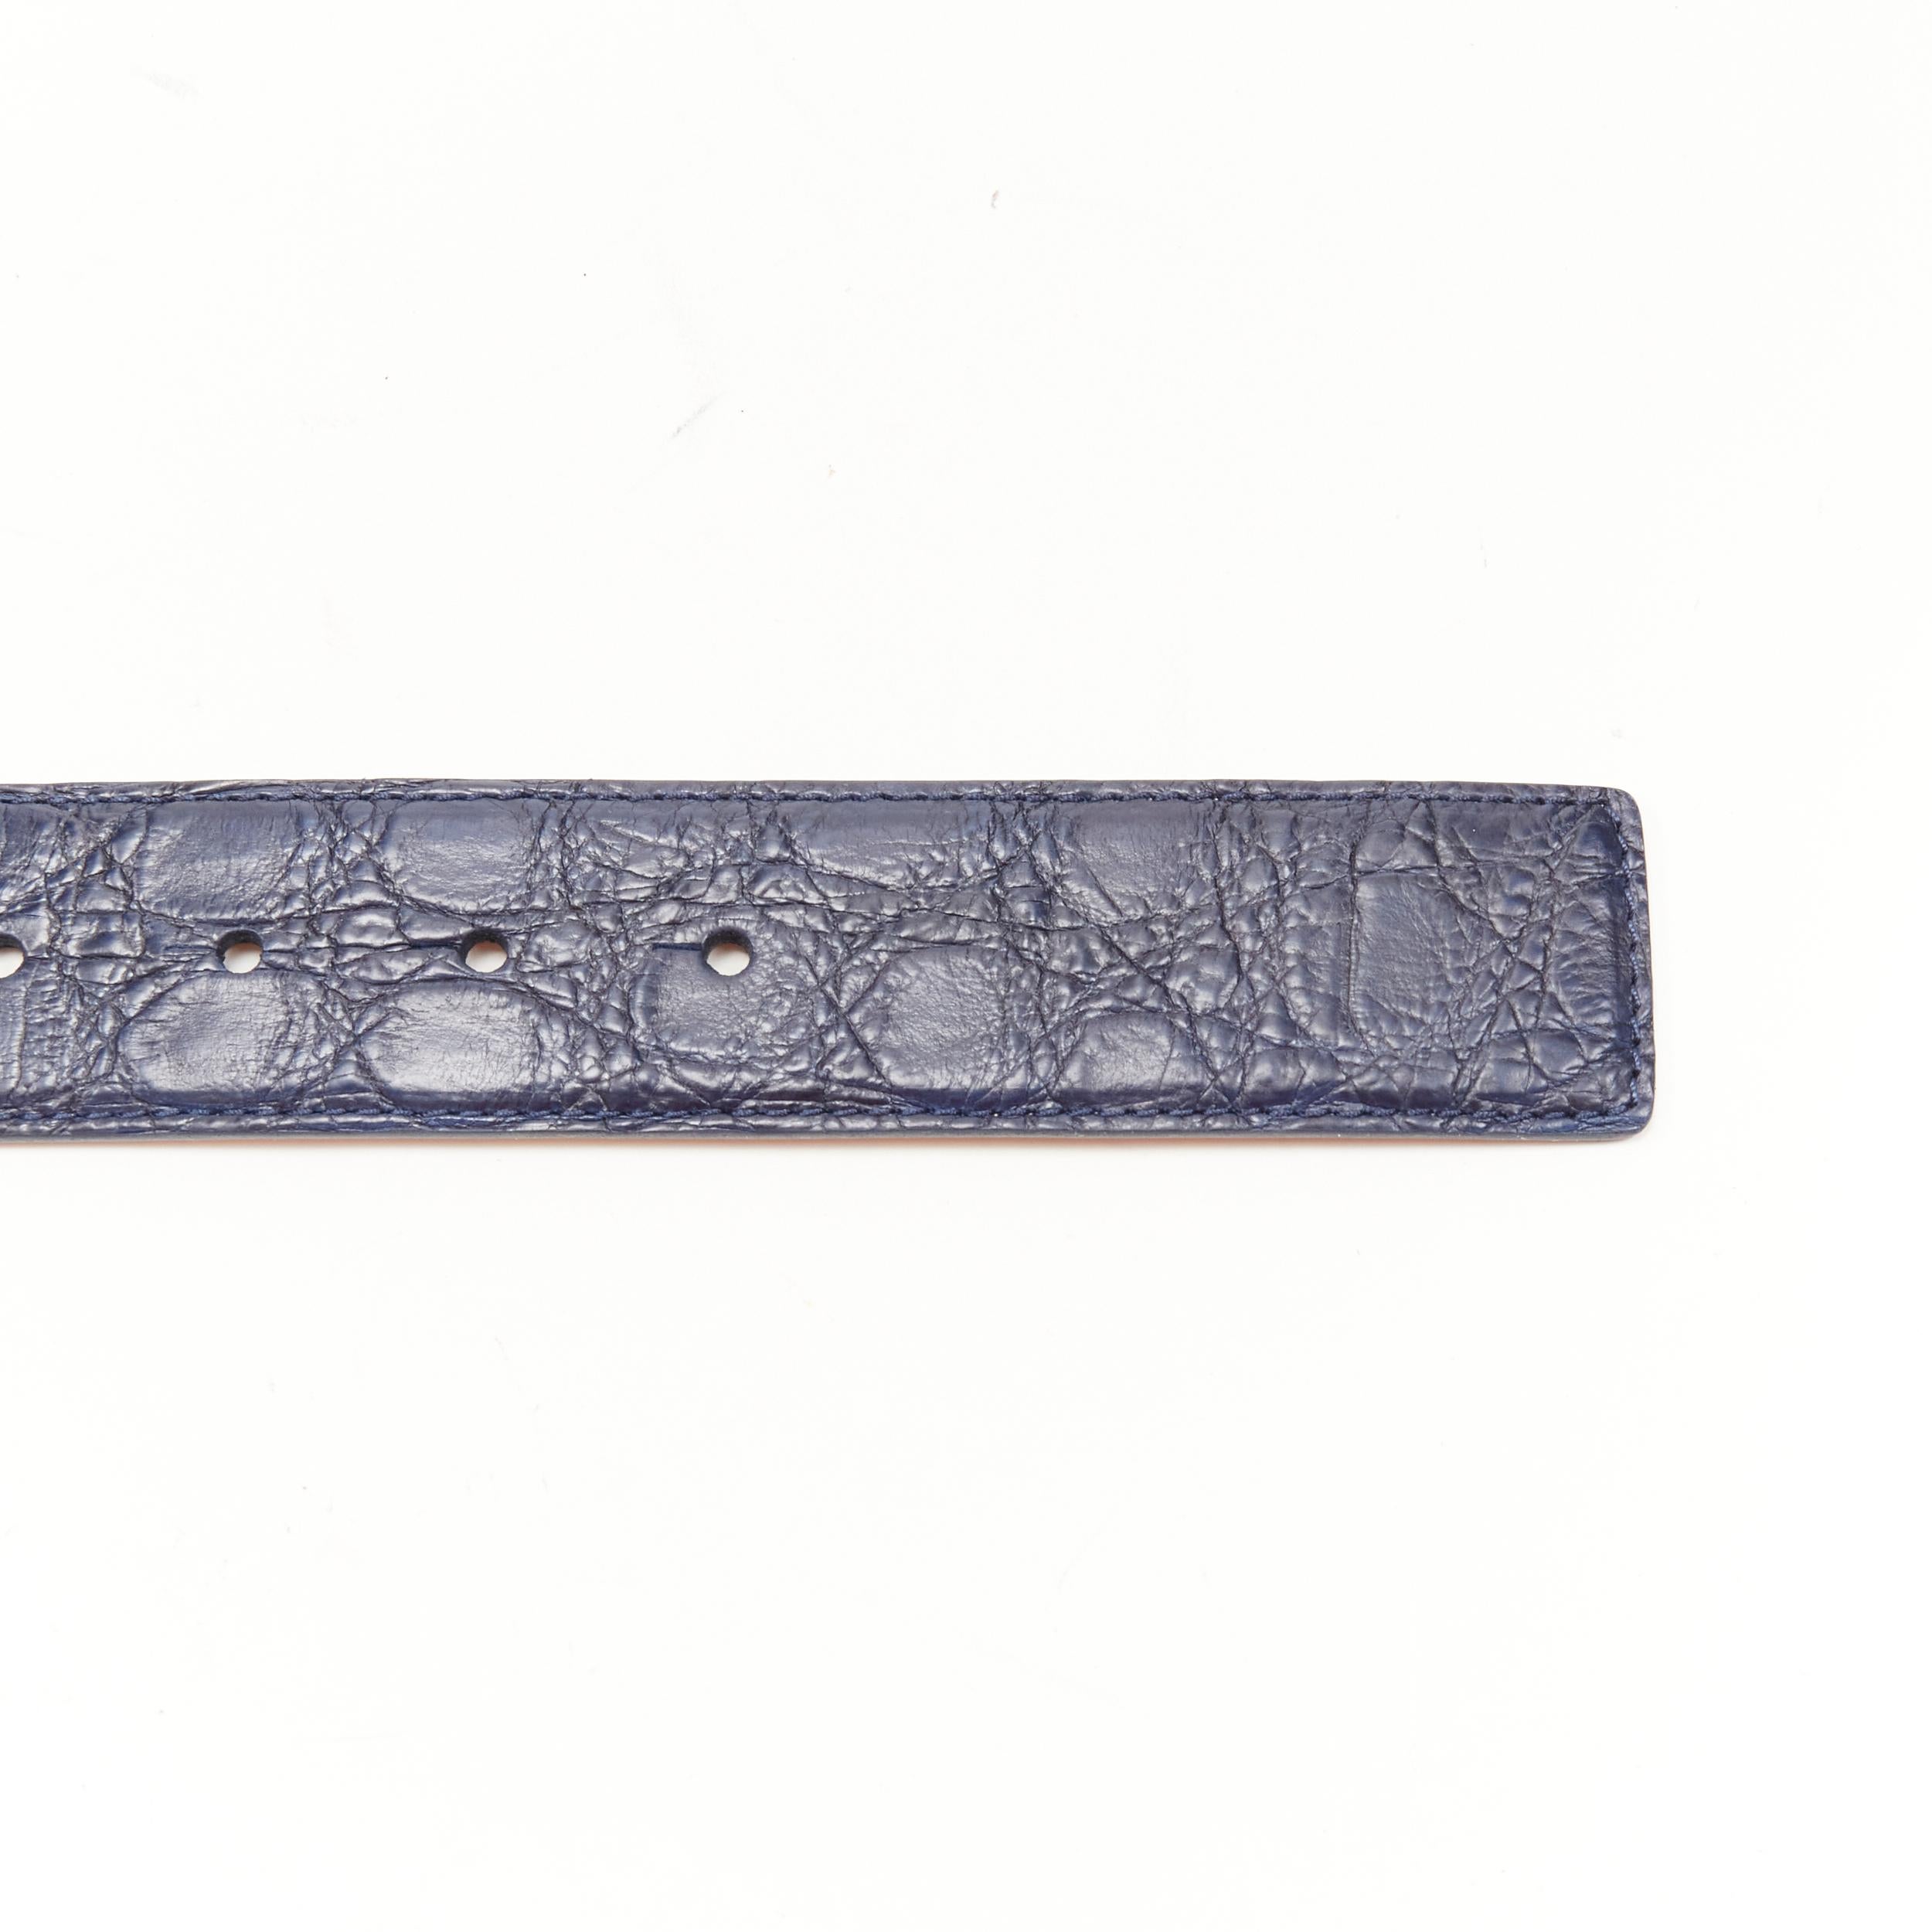 Black new VERSACE $1200 La Medusa silver buckle navy blue croc leather belt 110cm 44